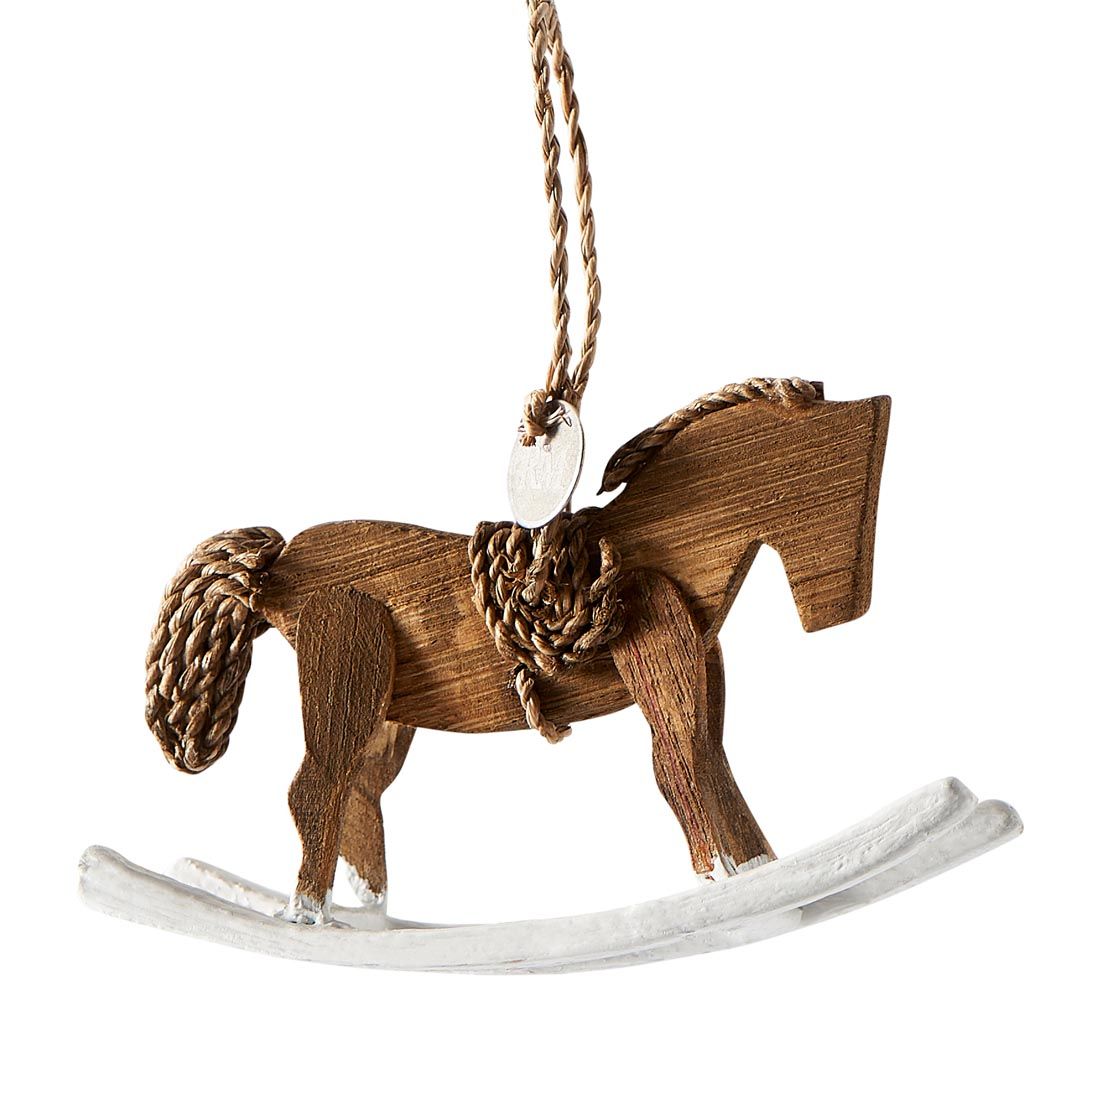 RIVIERA MAISON "Christmas Hanger Rocking Horse" 